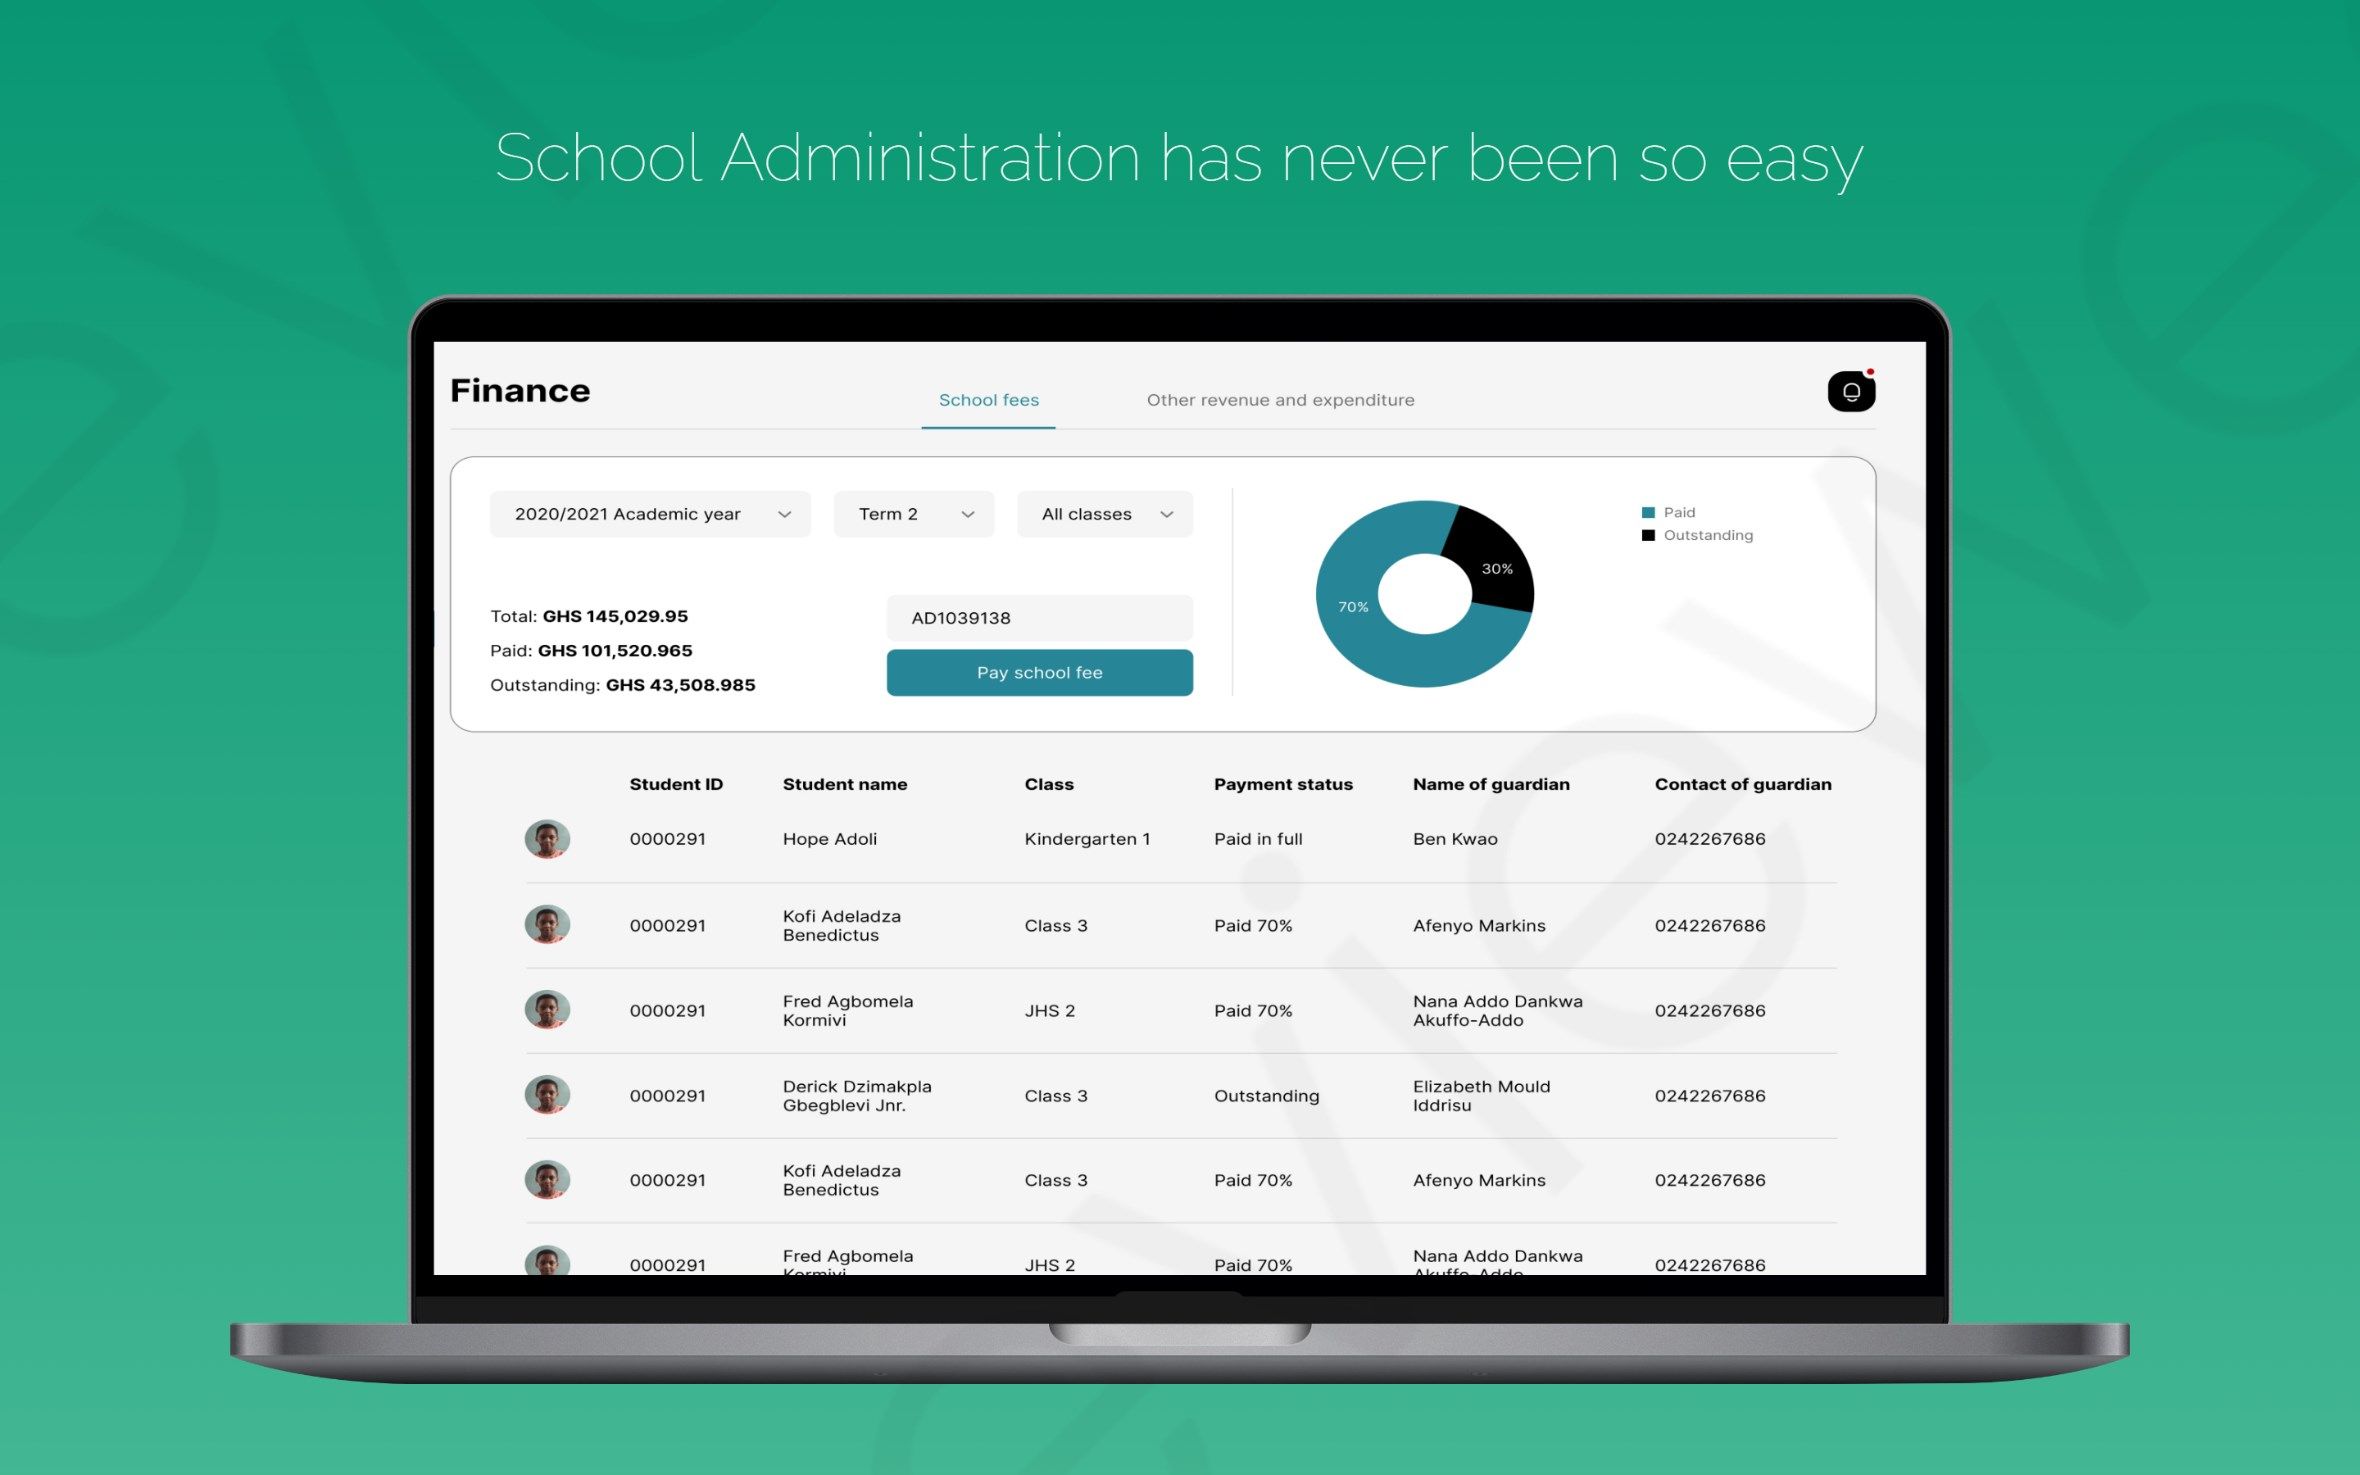 Adiutor | For School Administrators and Teachers